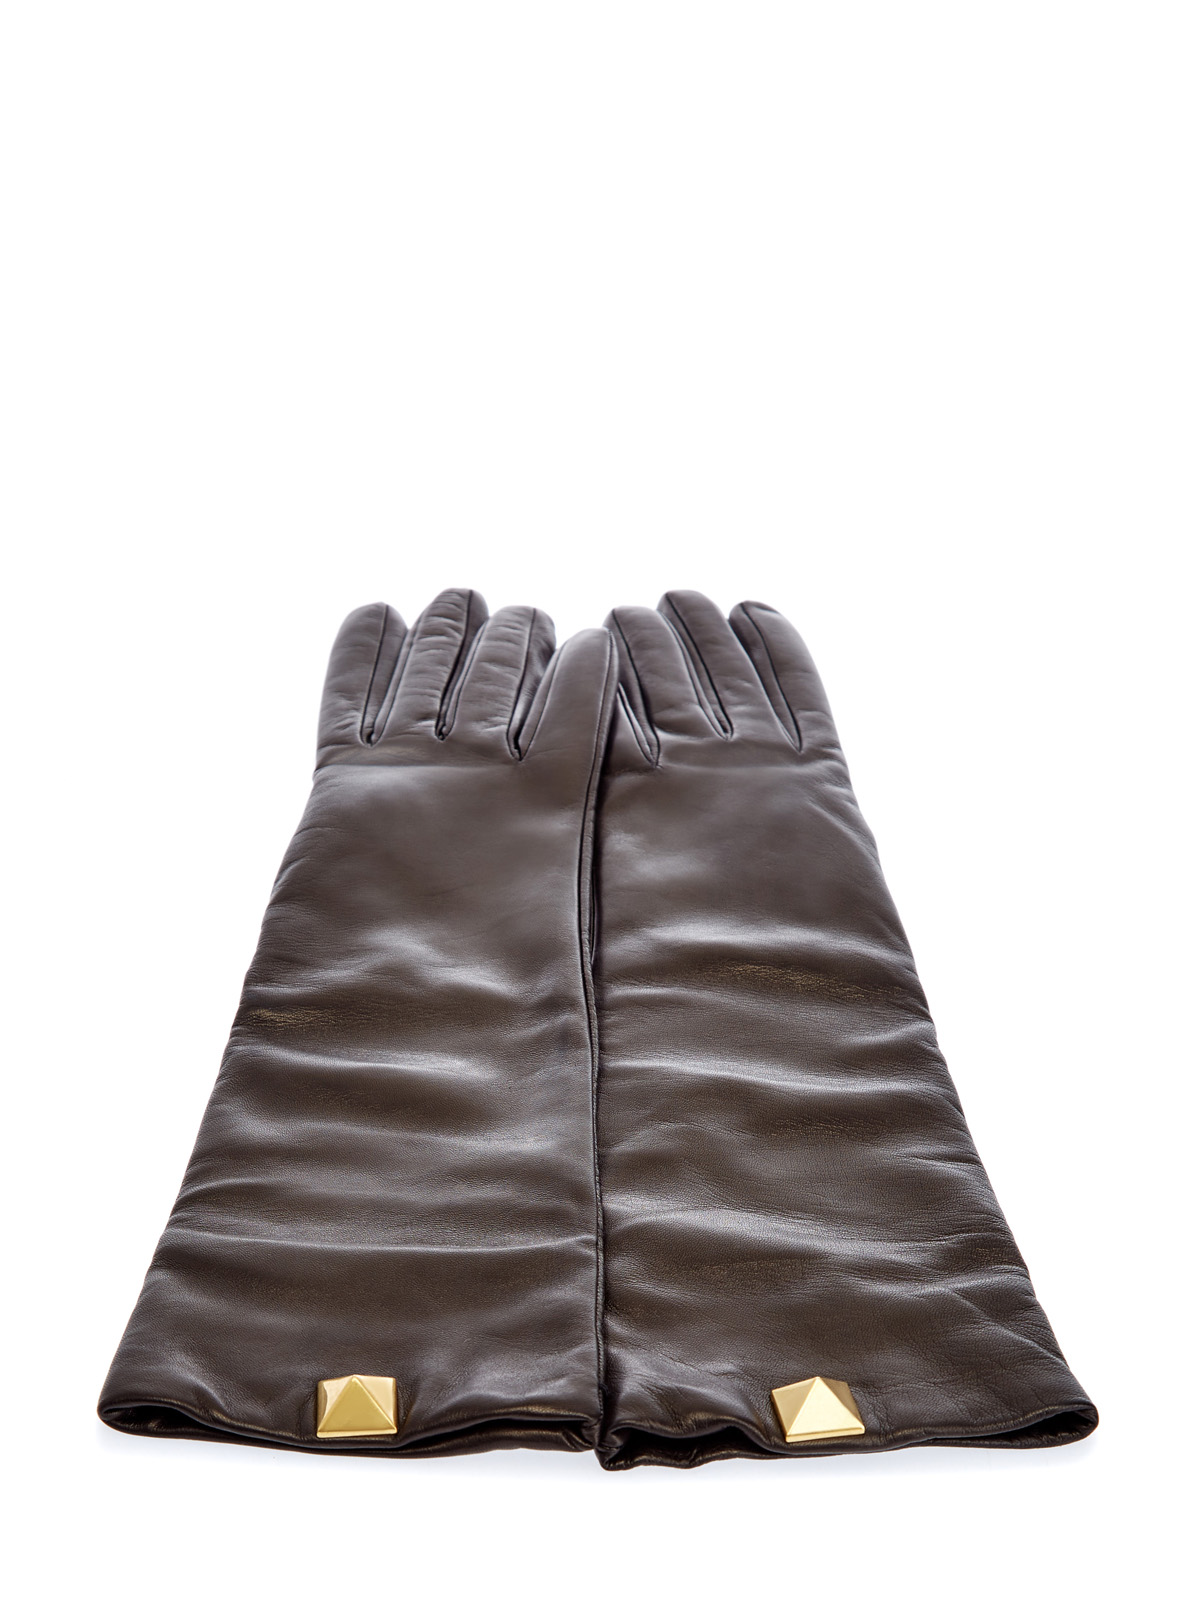 Перчатки Roman Stud из гладкой кожи наппа VALENTINO GARAVANI, цвет коричневый, размер XS;M;L - фото 2